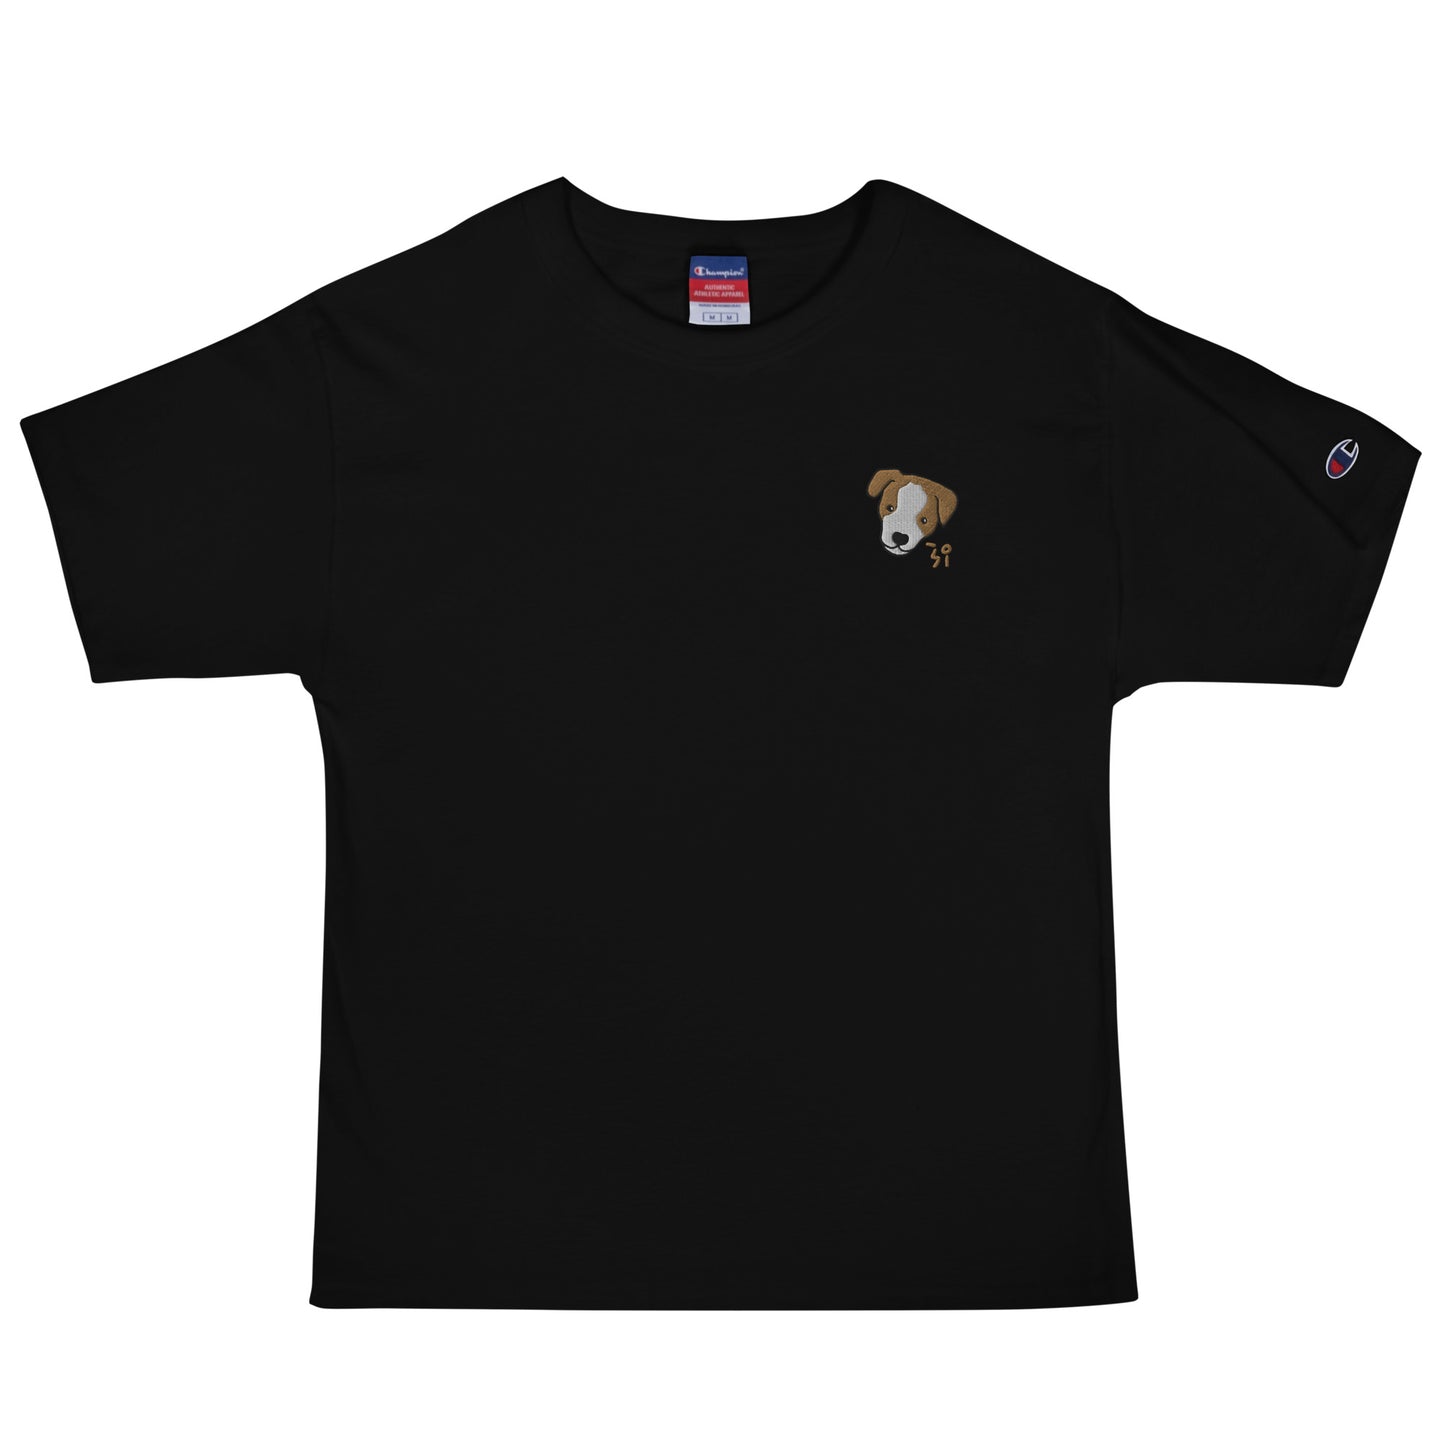 Jack Russell Terrier Men's Champion T-Shirt